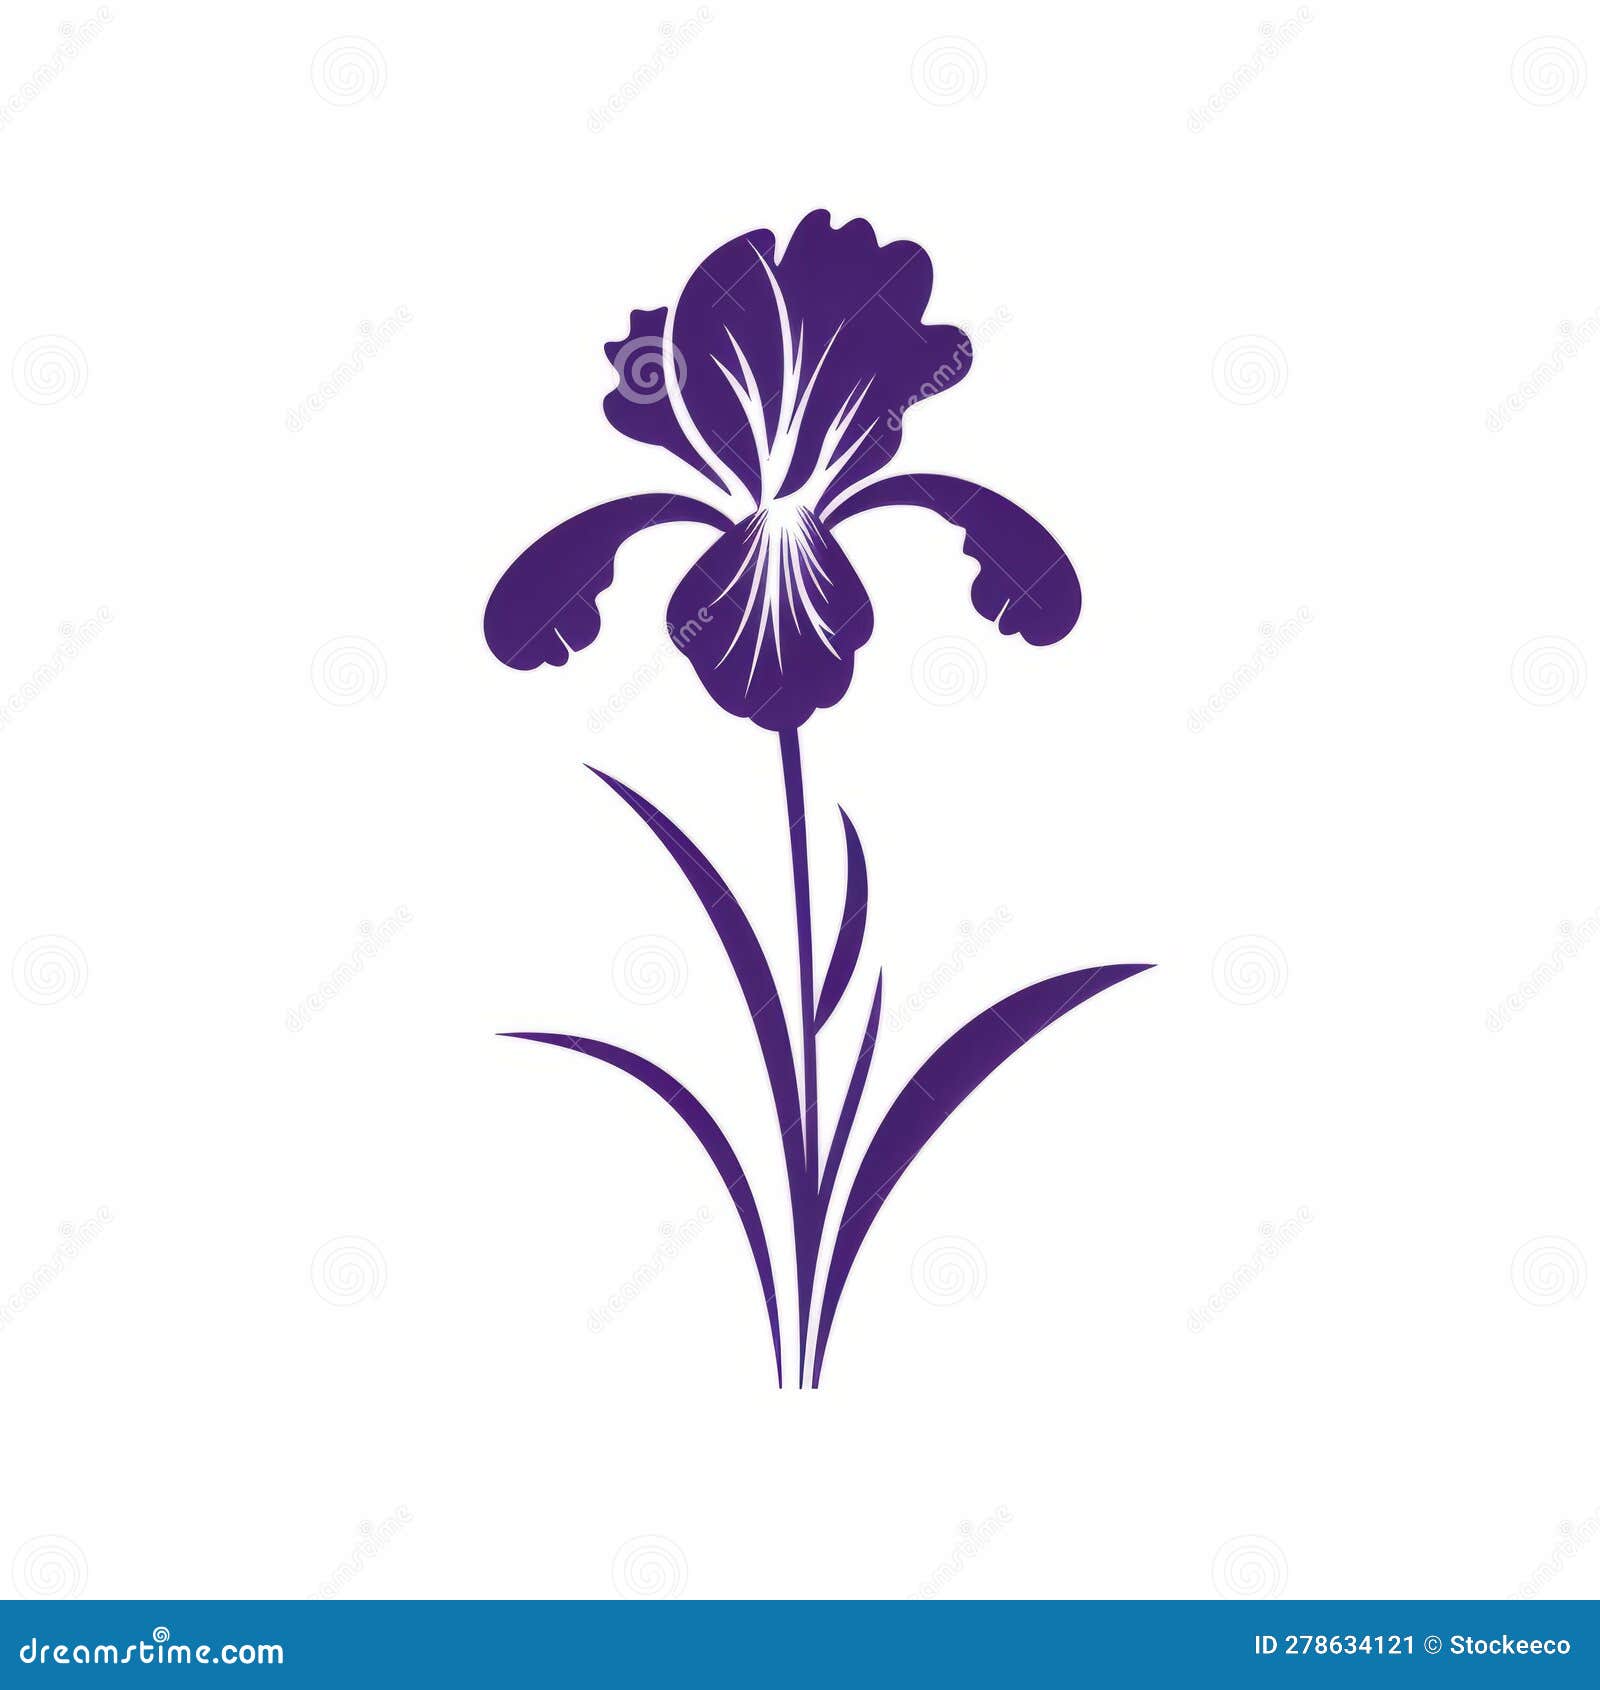 Minimalistic Iris Silhouette Vector Clipart Stock Illustration ...